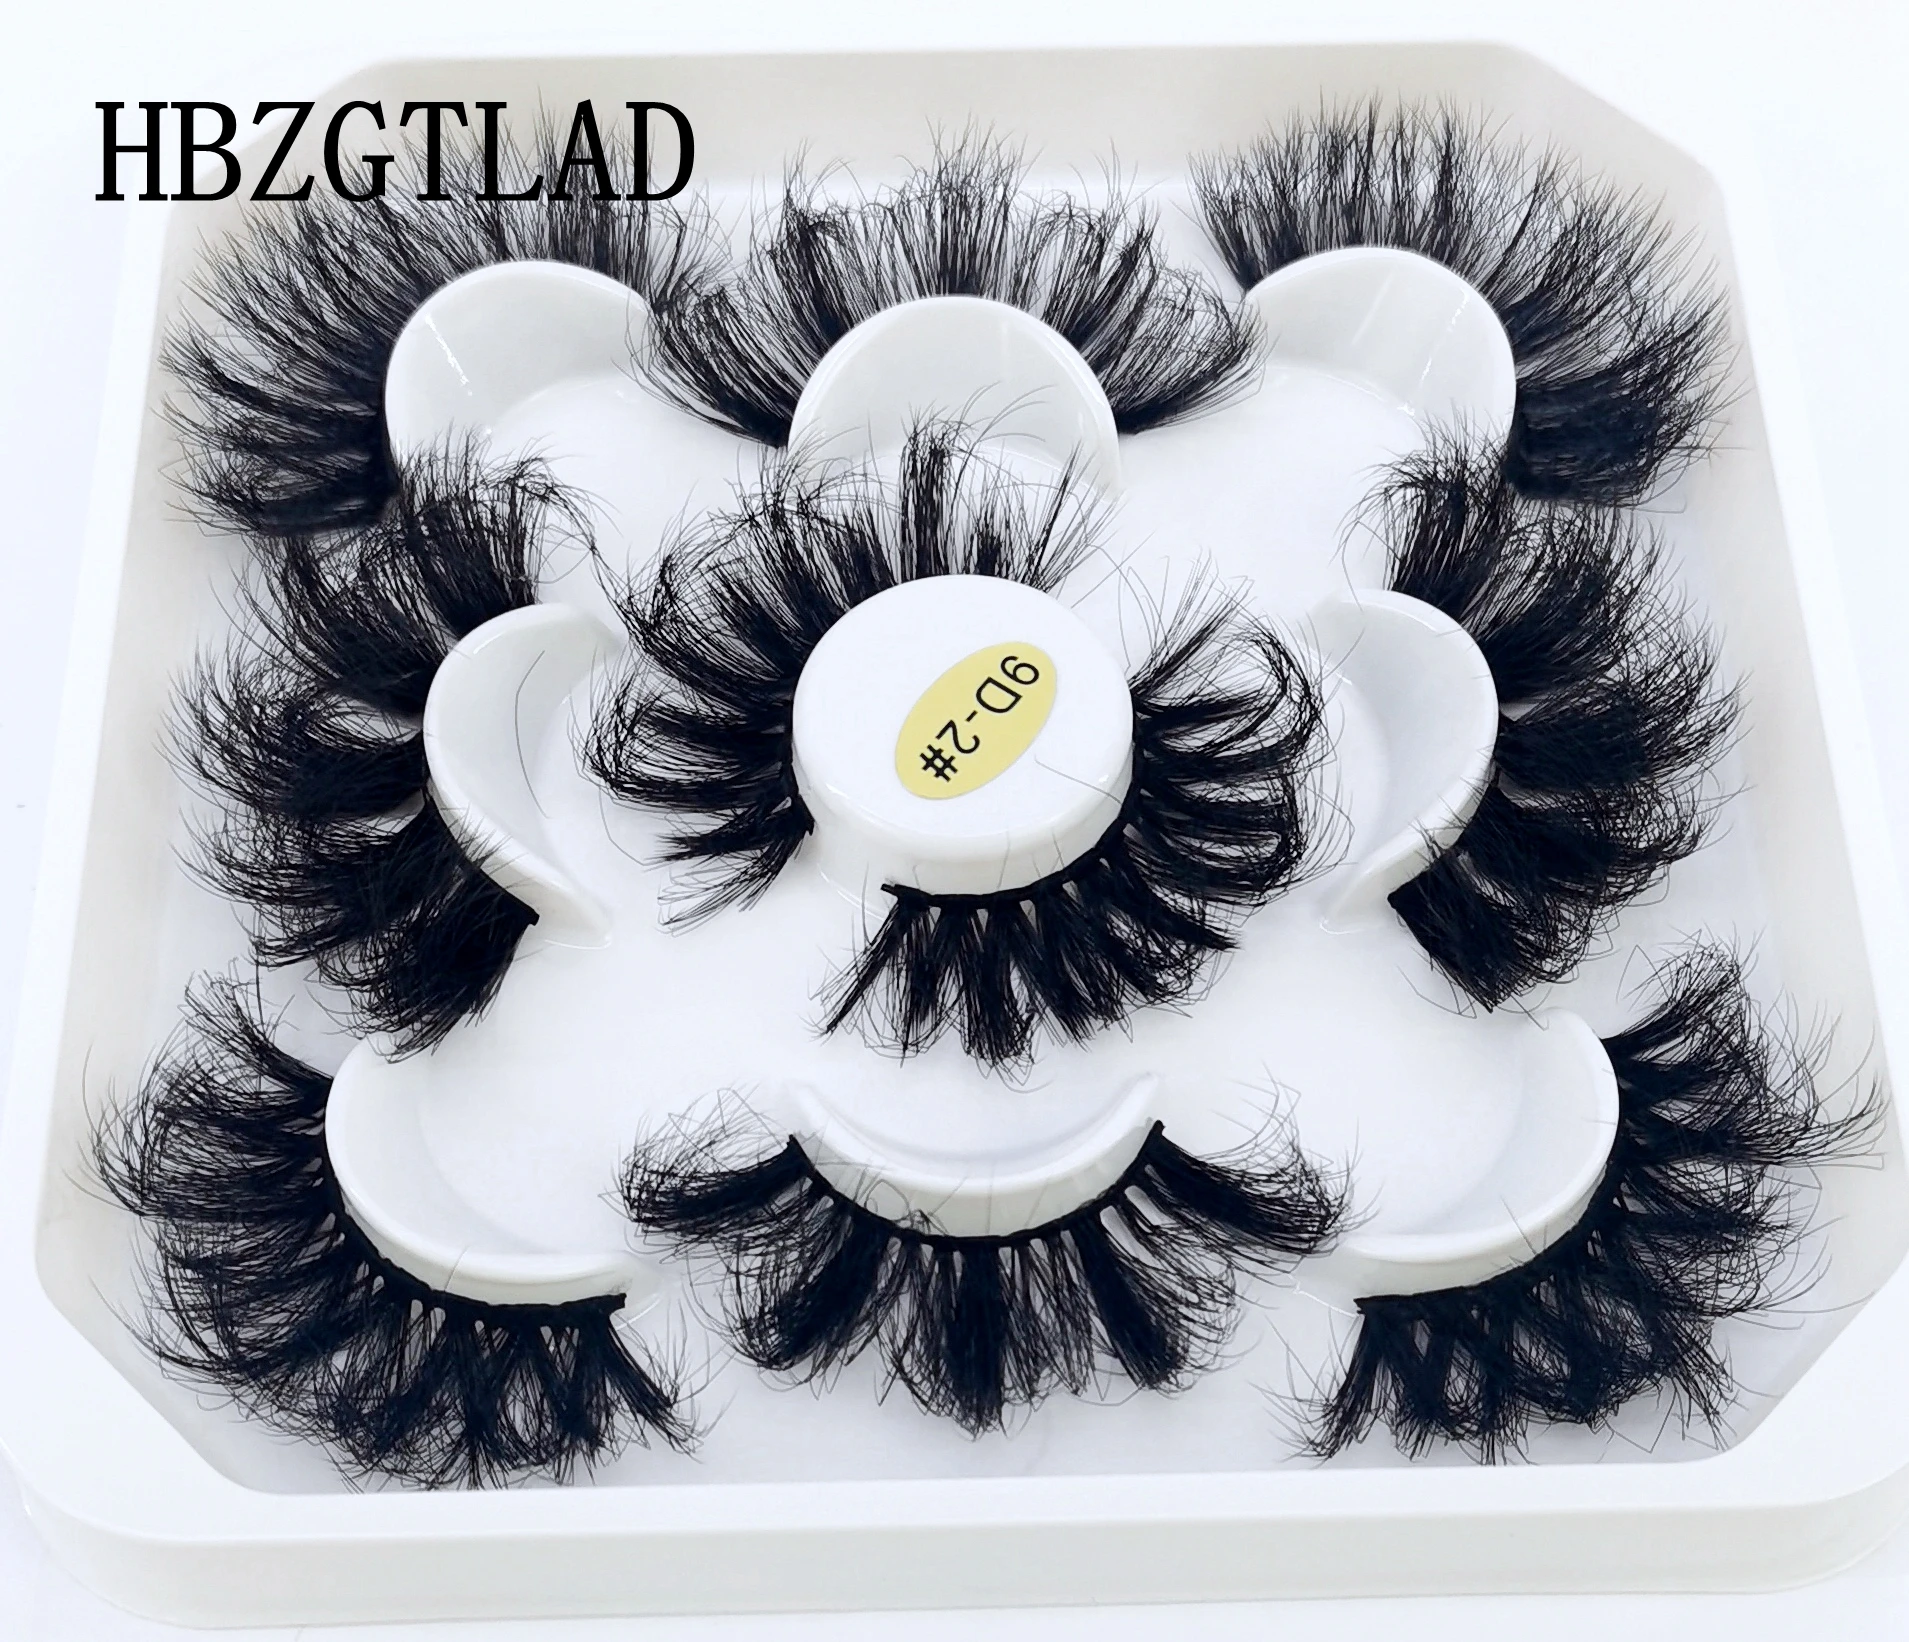 HBZGTLAD 5 Pairs 3D Soft Mink False Eyelashes Handmade Wispy Fluffy Long Fake Lashes Natural Eye Extension Makeup Kit Cilios